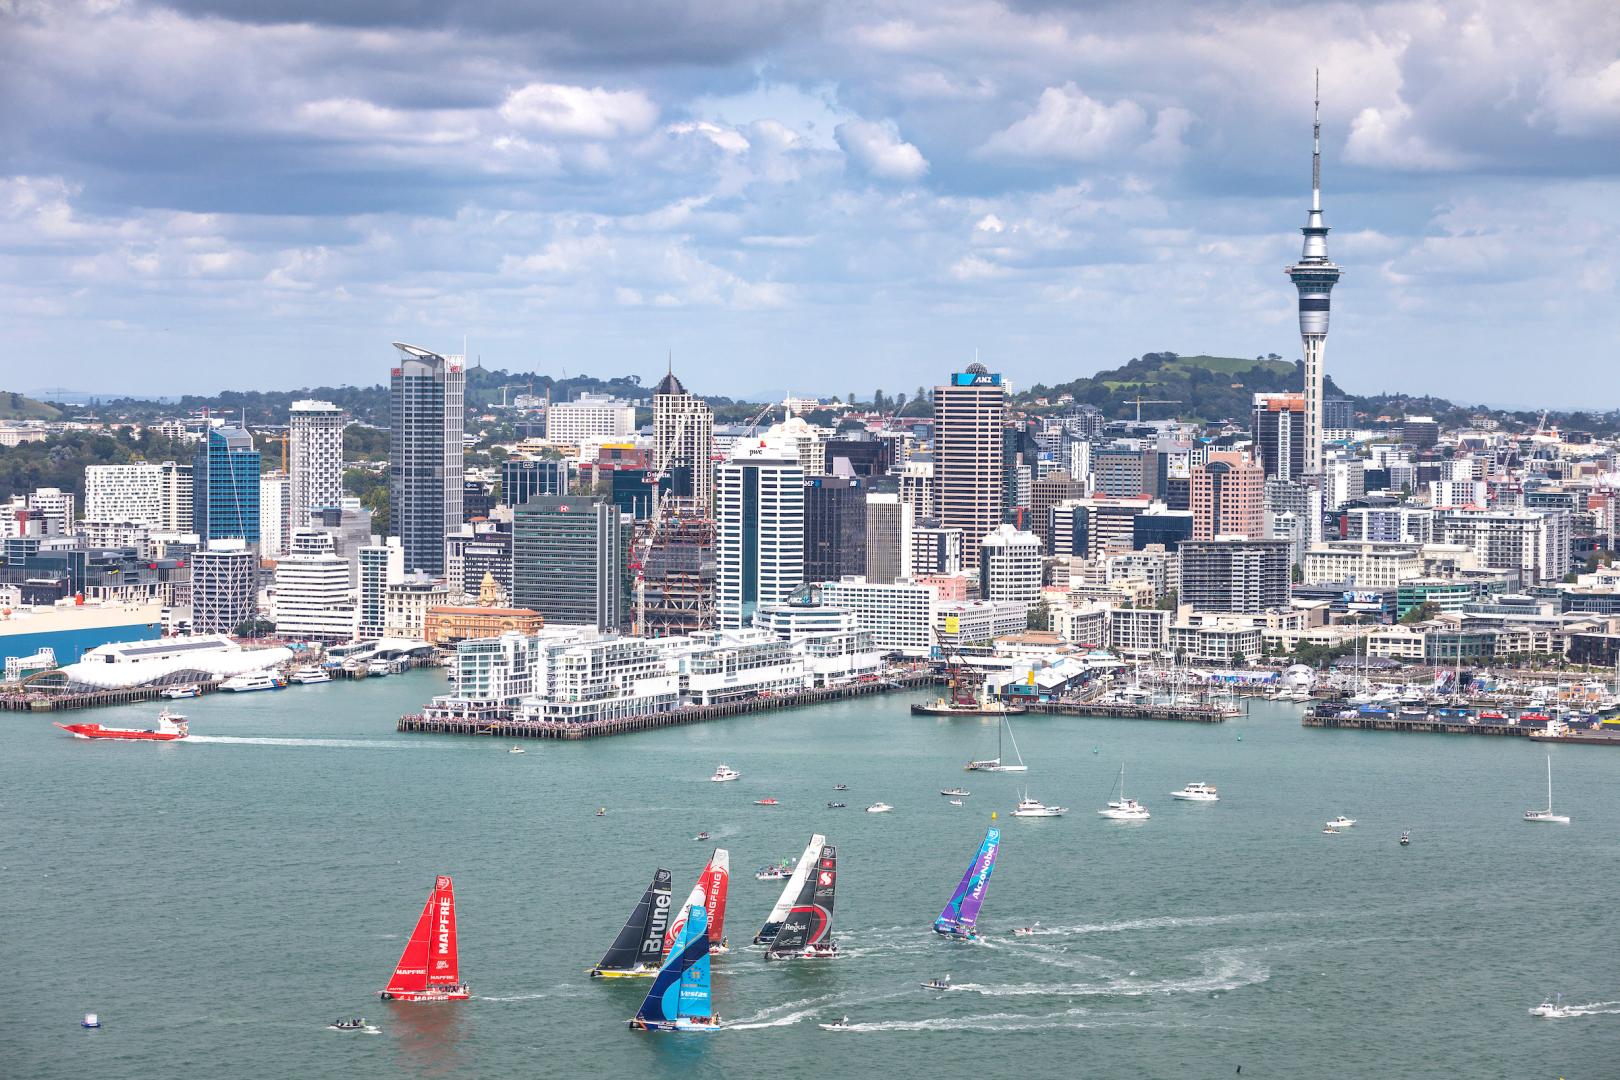 MAPFRE lead a spectacular start from Auckland © María Muiña/MAPFRE